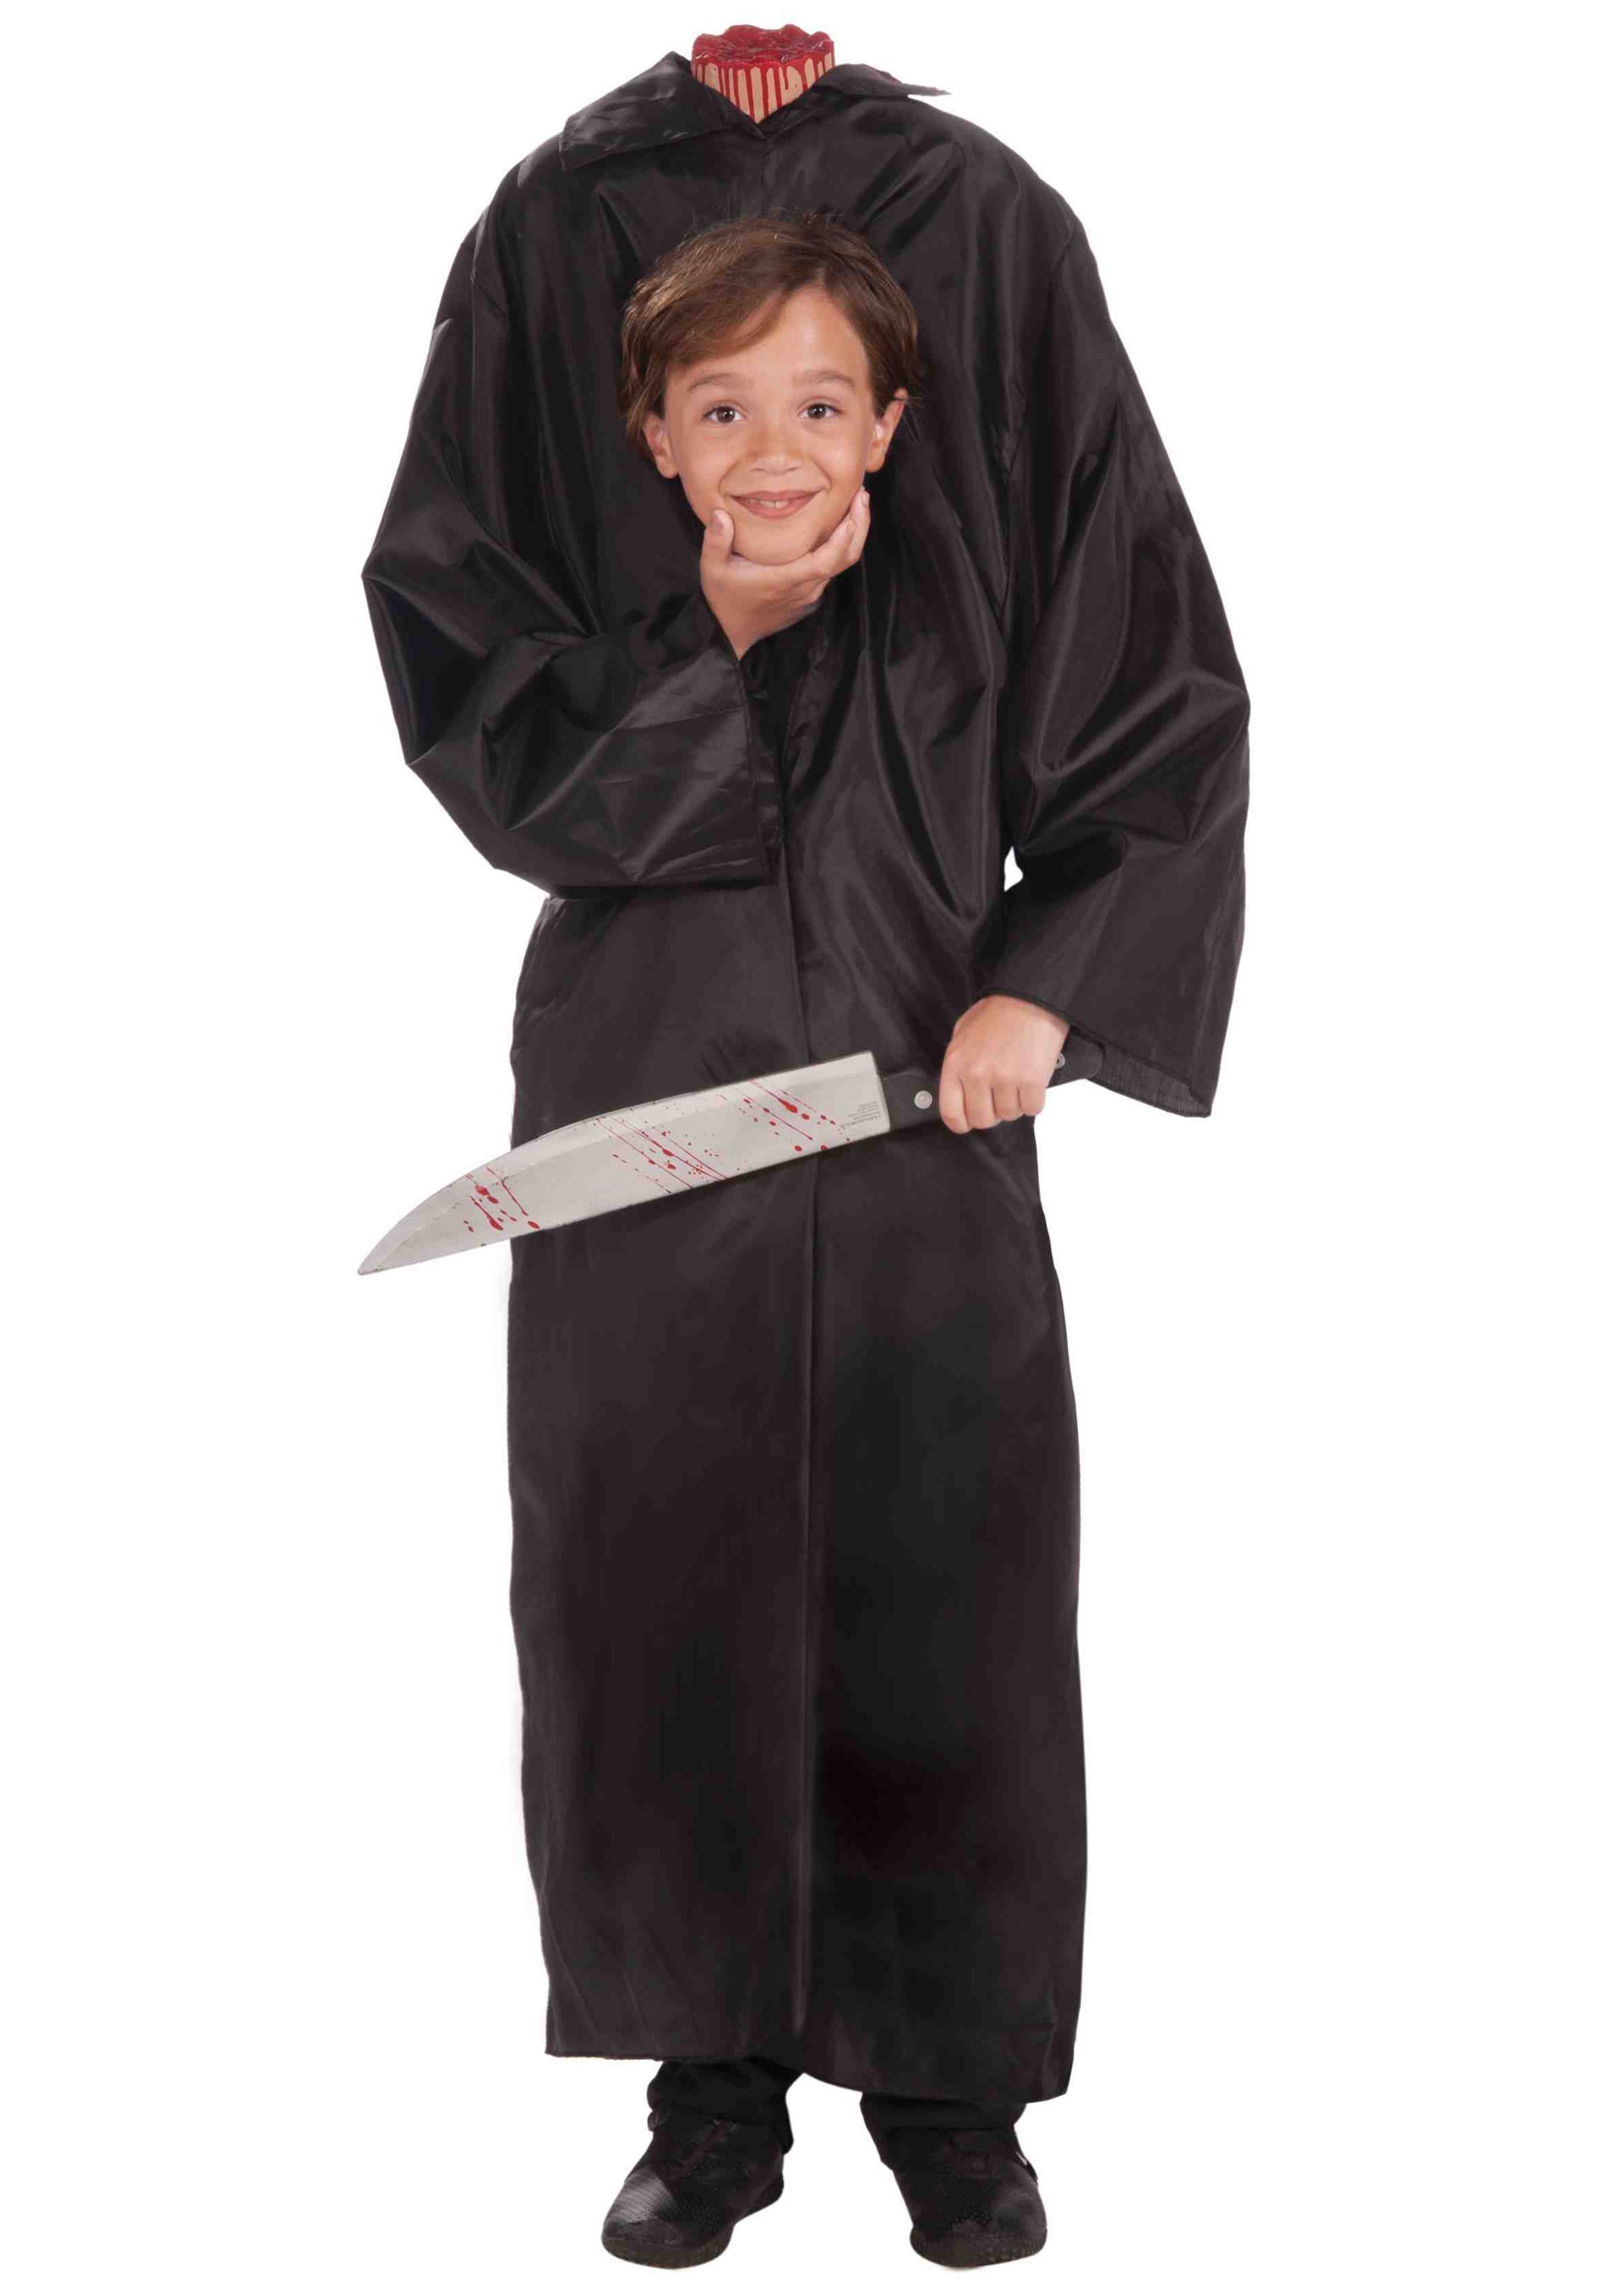 Headless Boy Costume for Kids | Scary Halloween Costume